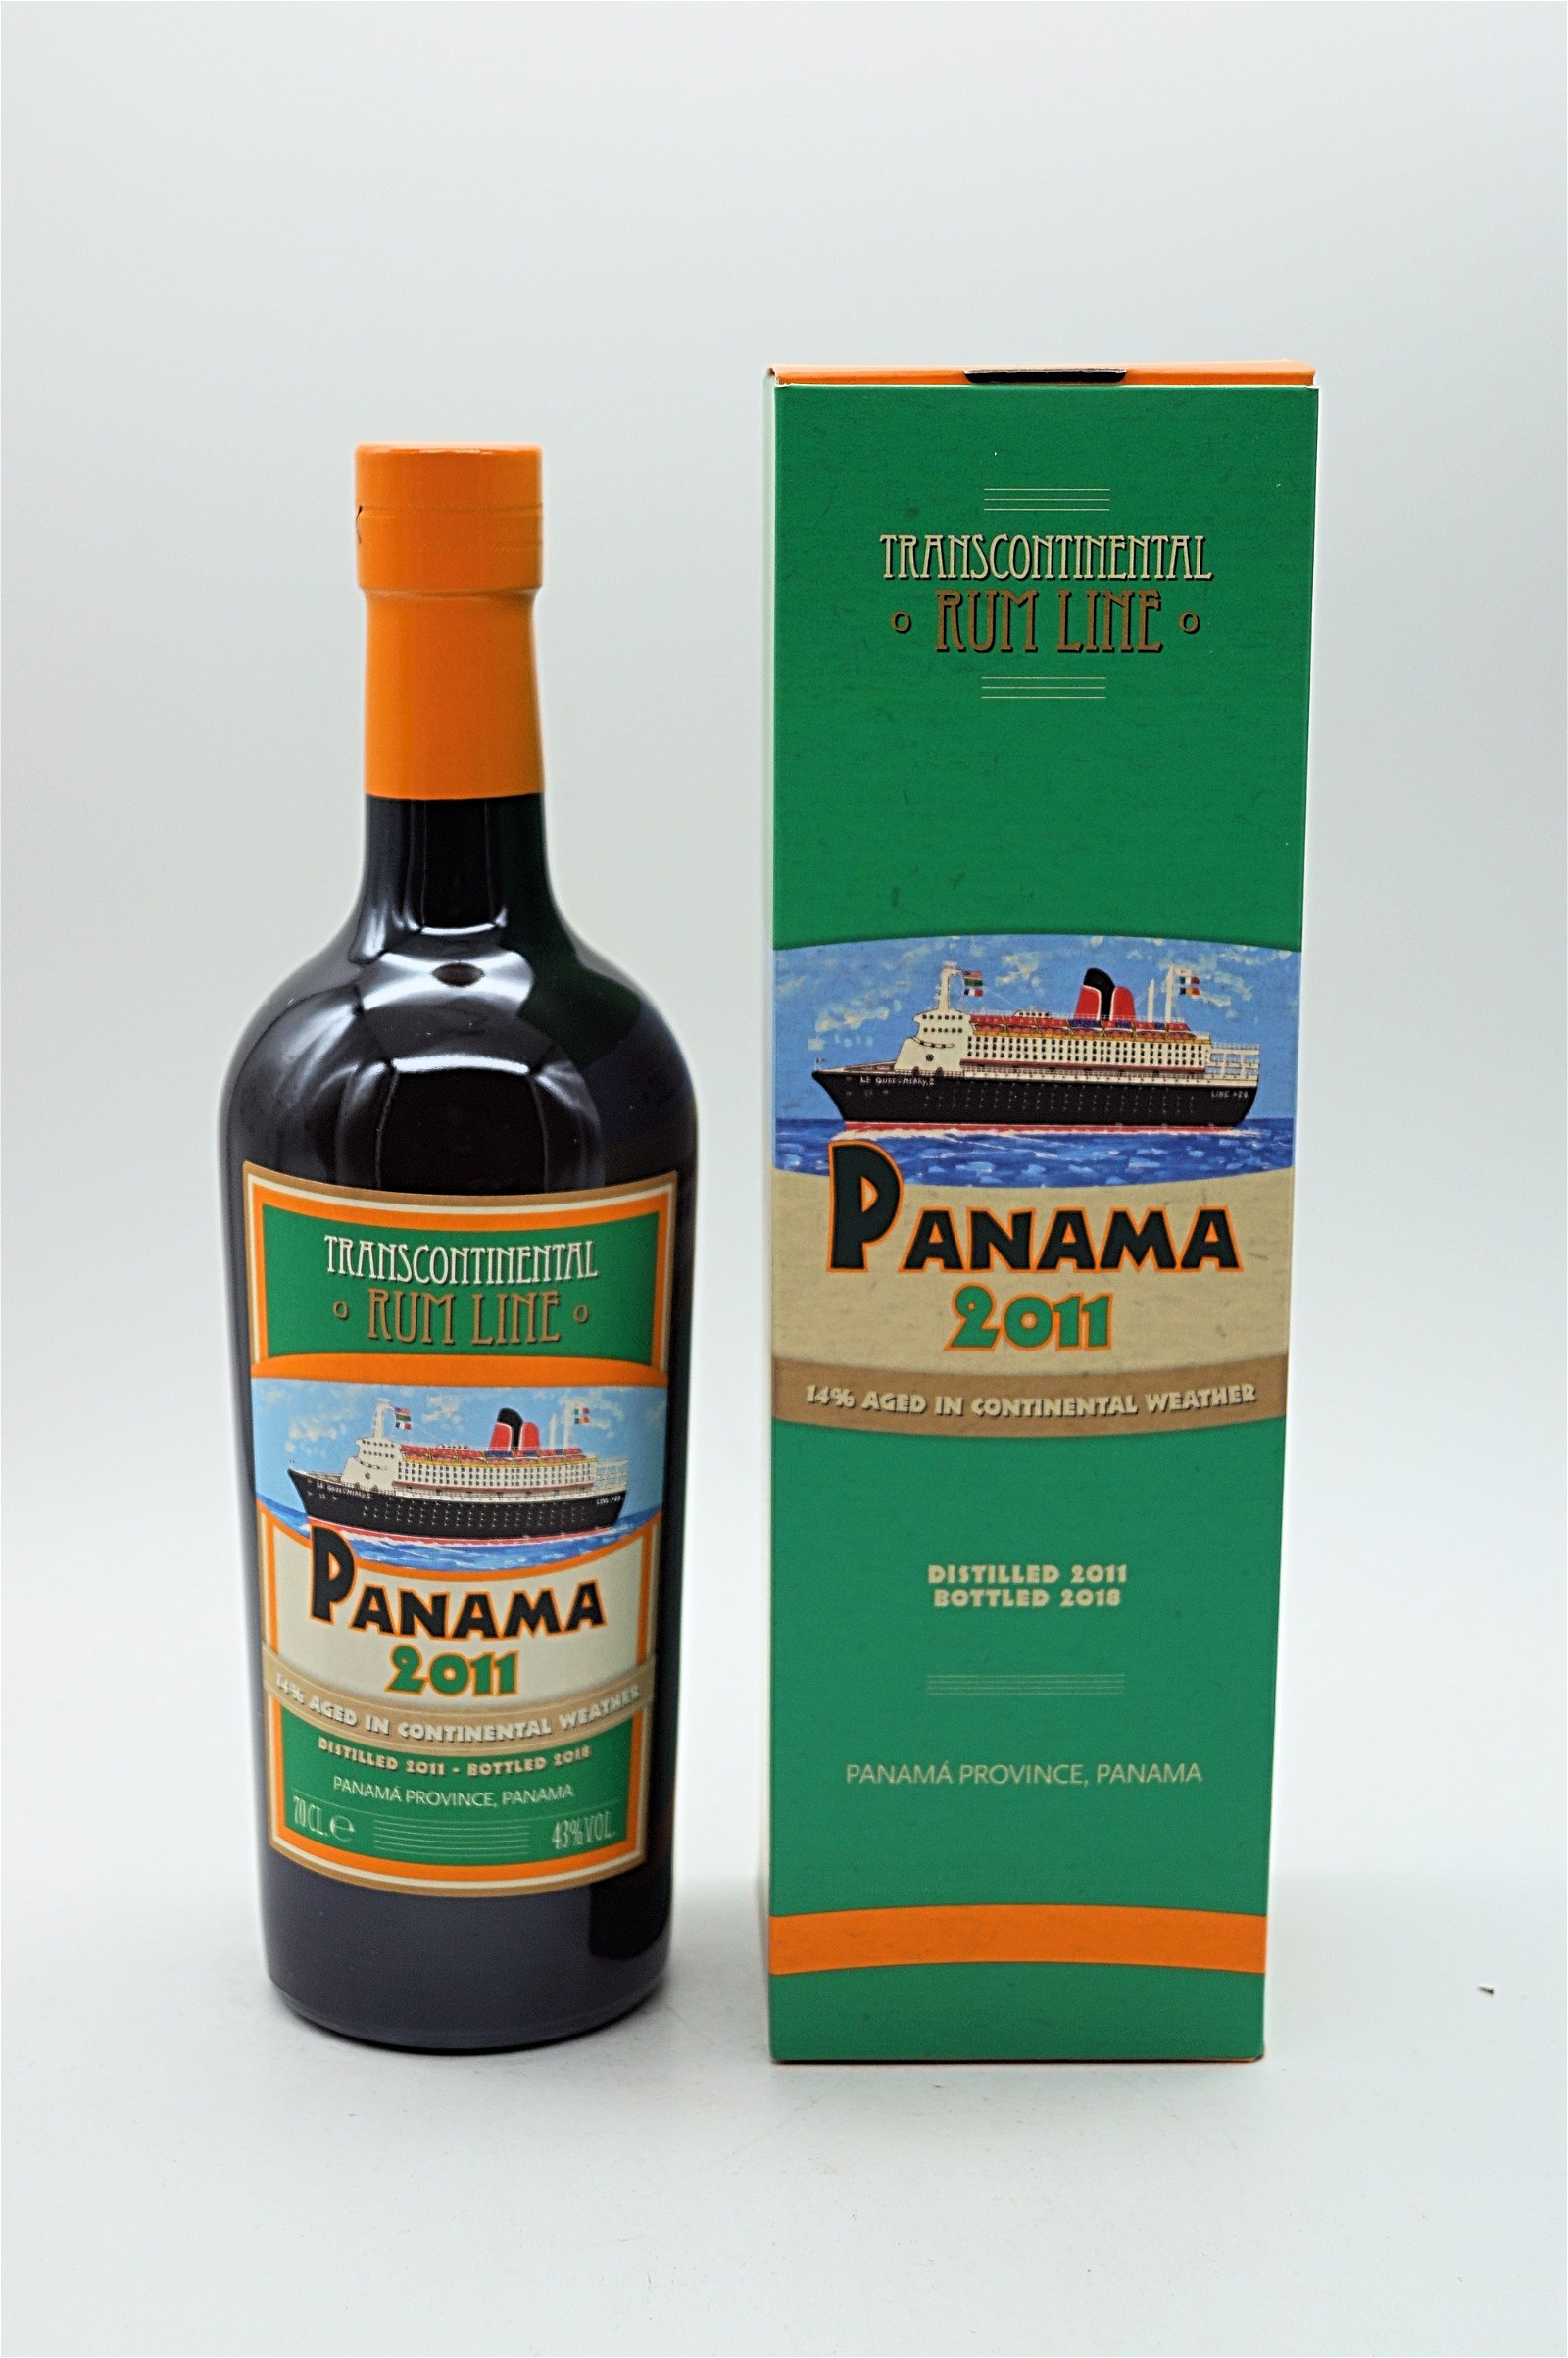 Transcontinental Rum Line Panama 2011